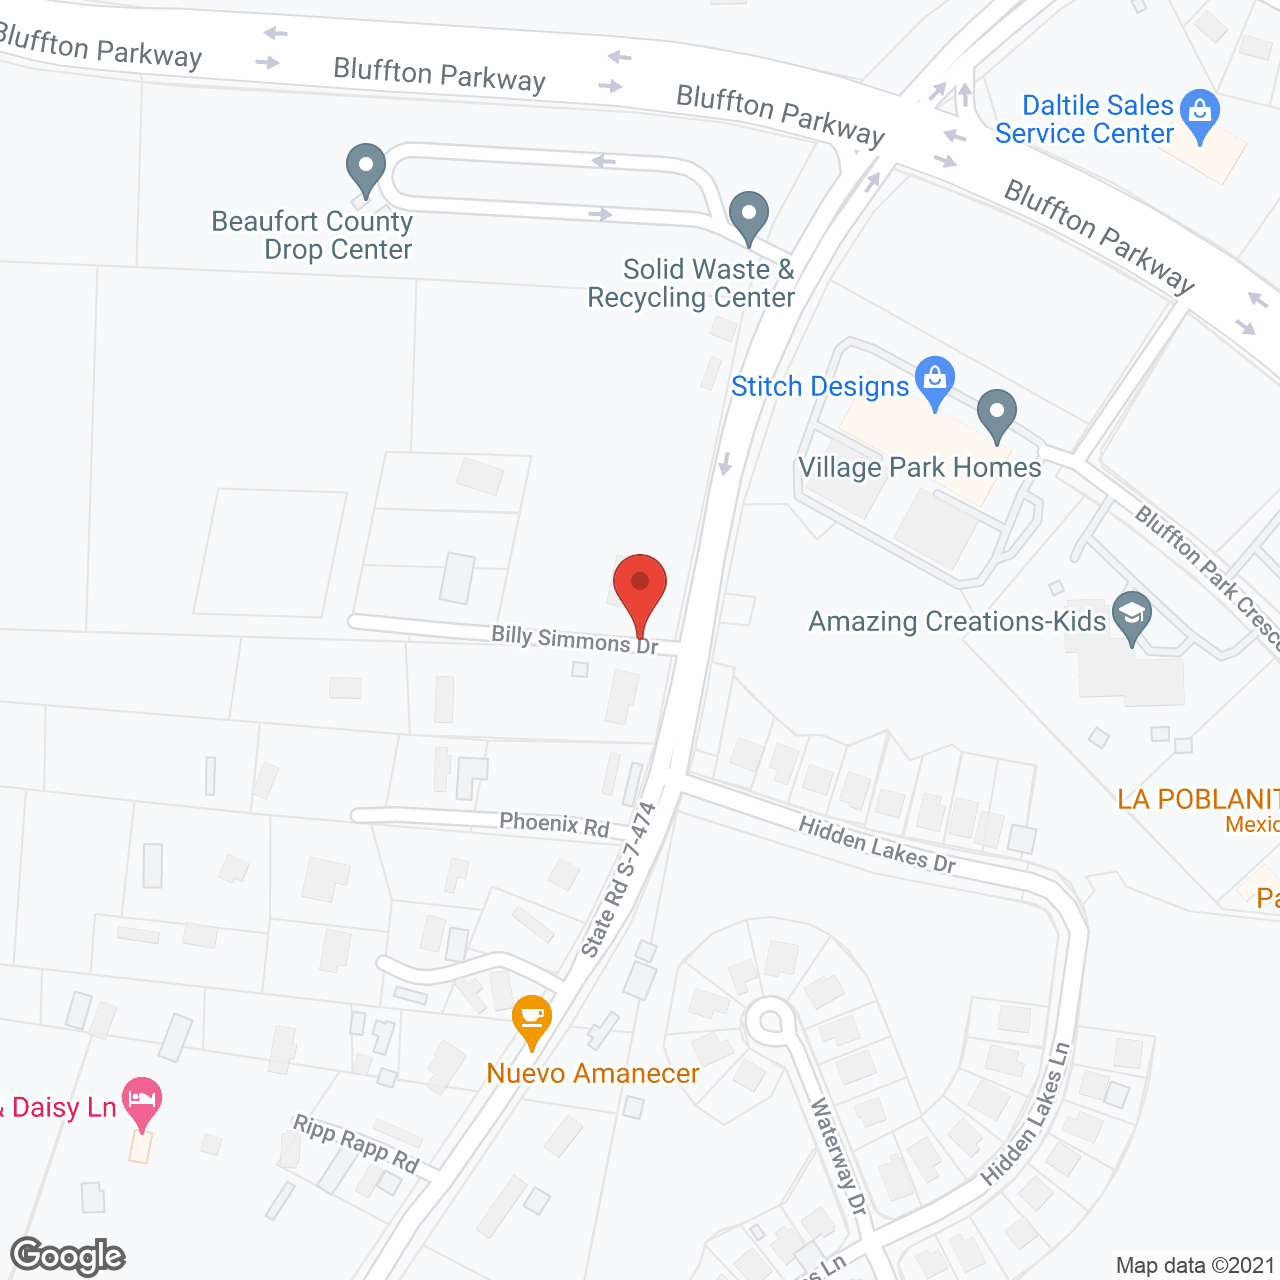 Palmettos Of Bluffton in google map